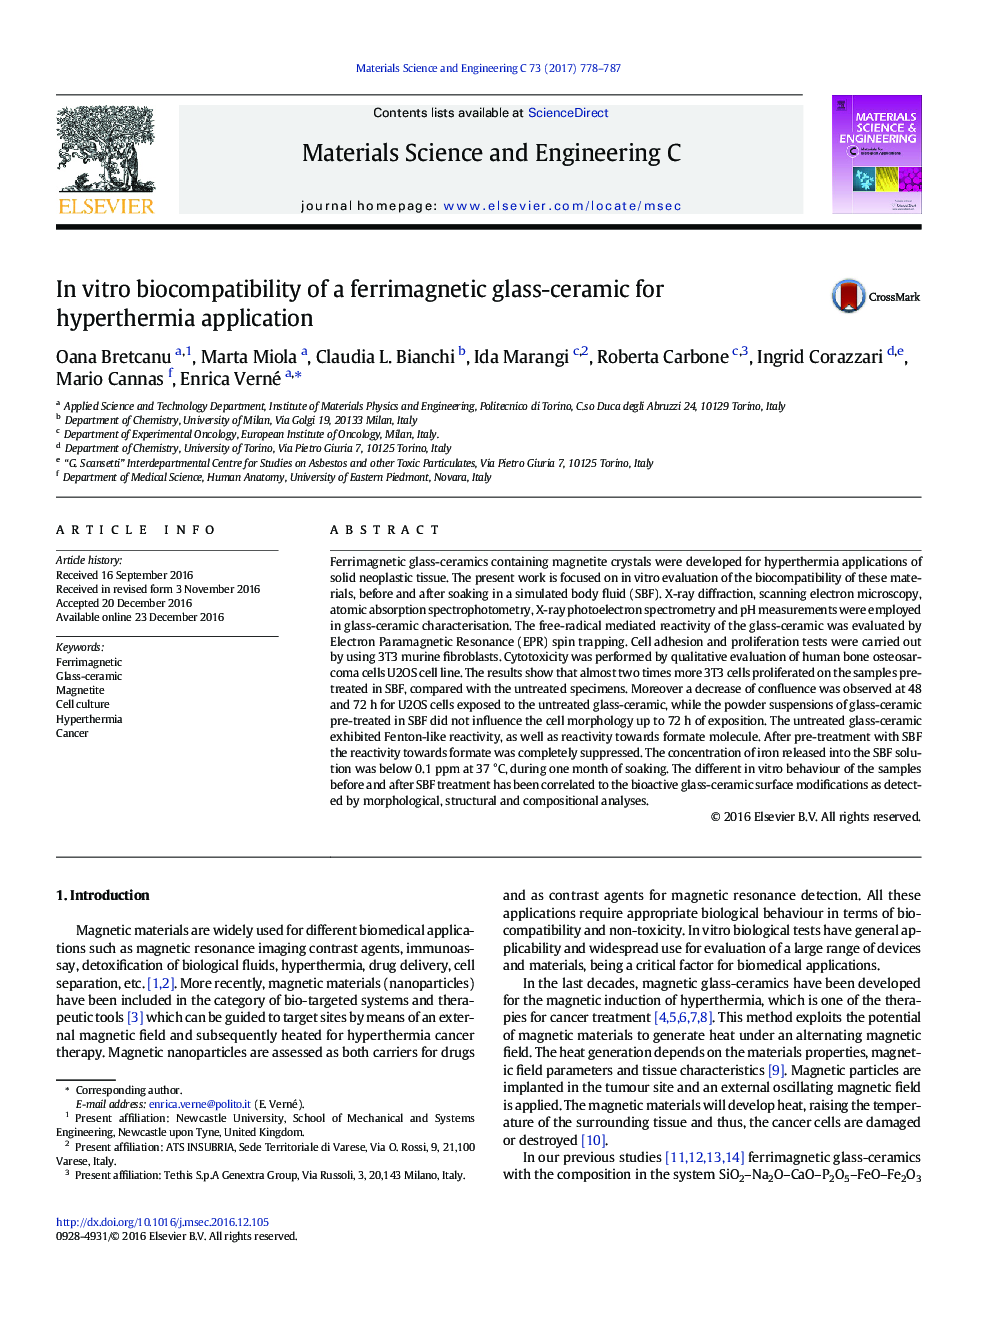 In vitro biocompatibility of a ferrimagnetic glass-ceramic for hyperthermia application